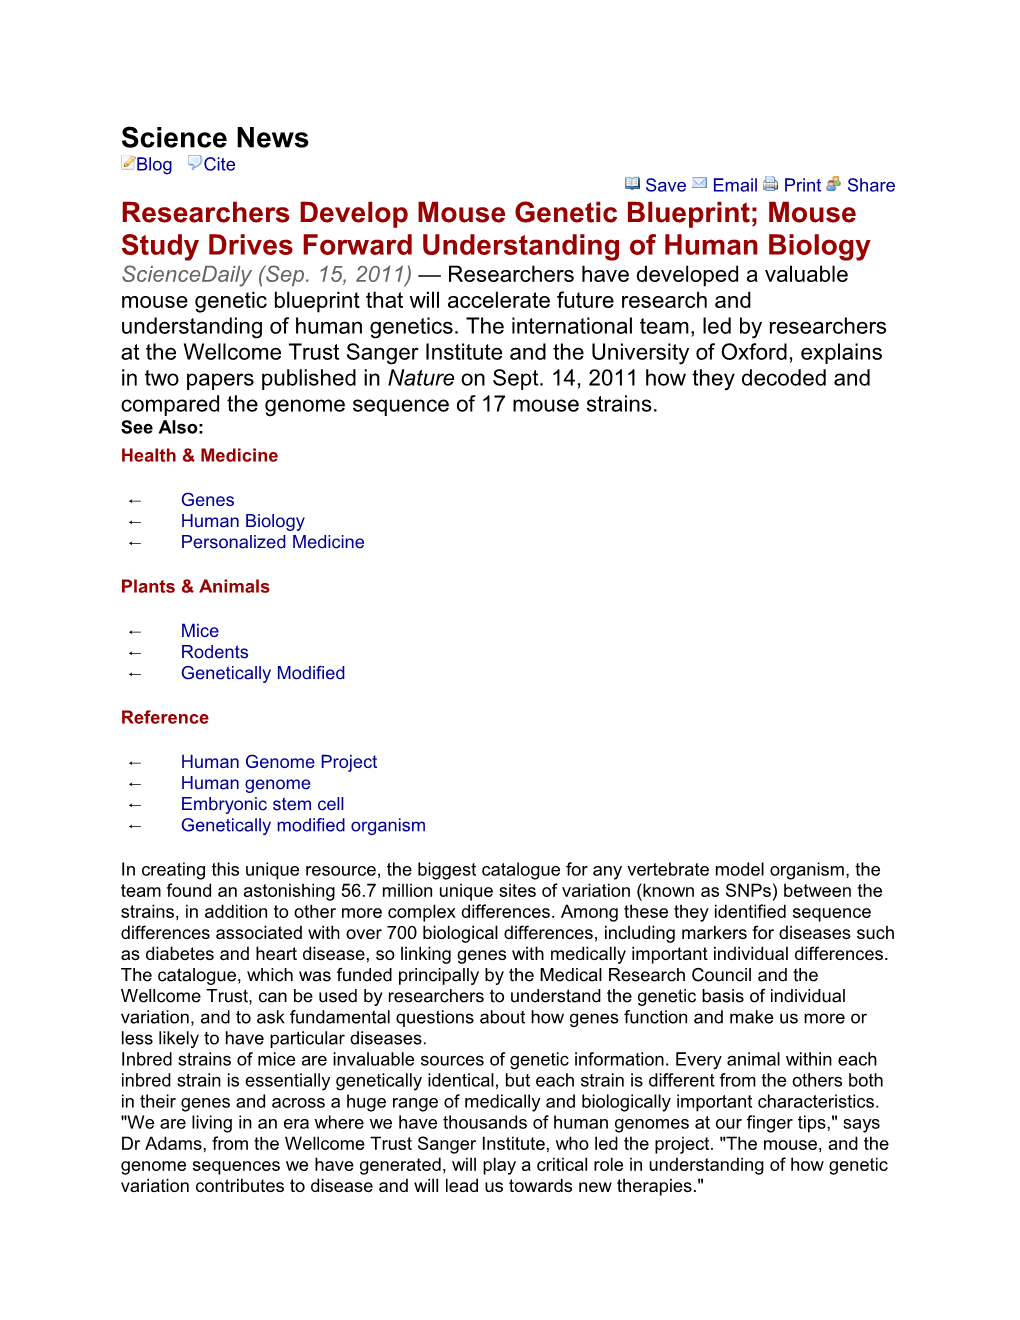 Researchers Develop Mouse Genetic Blueprint; Mouse Study Drives Forward Understanding